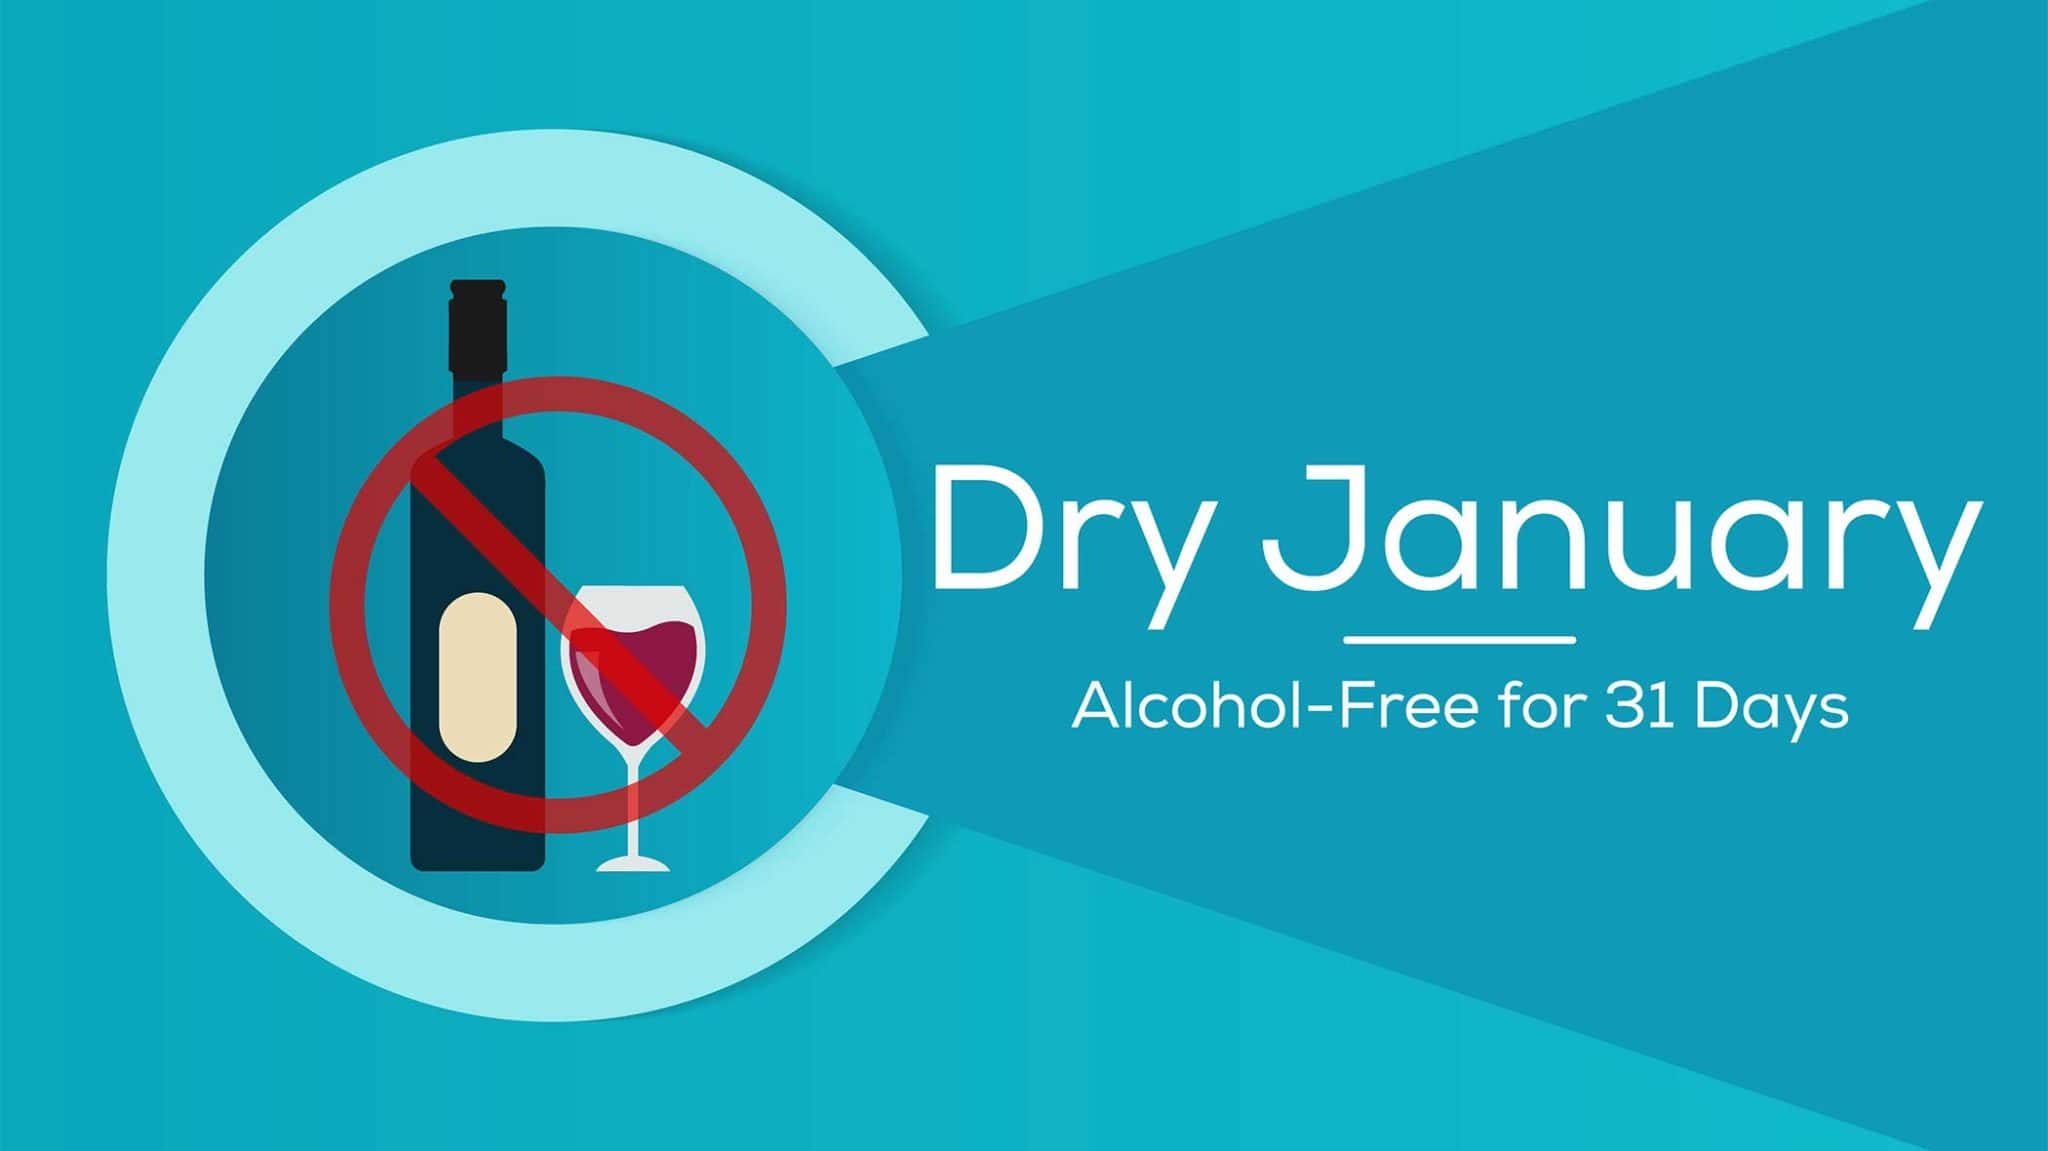 7 Health Benefits Of Dry January